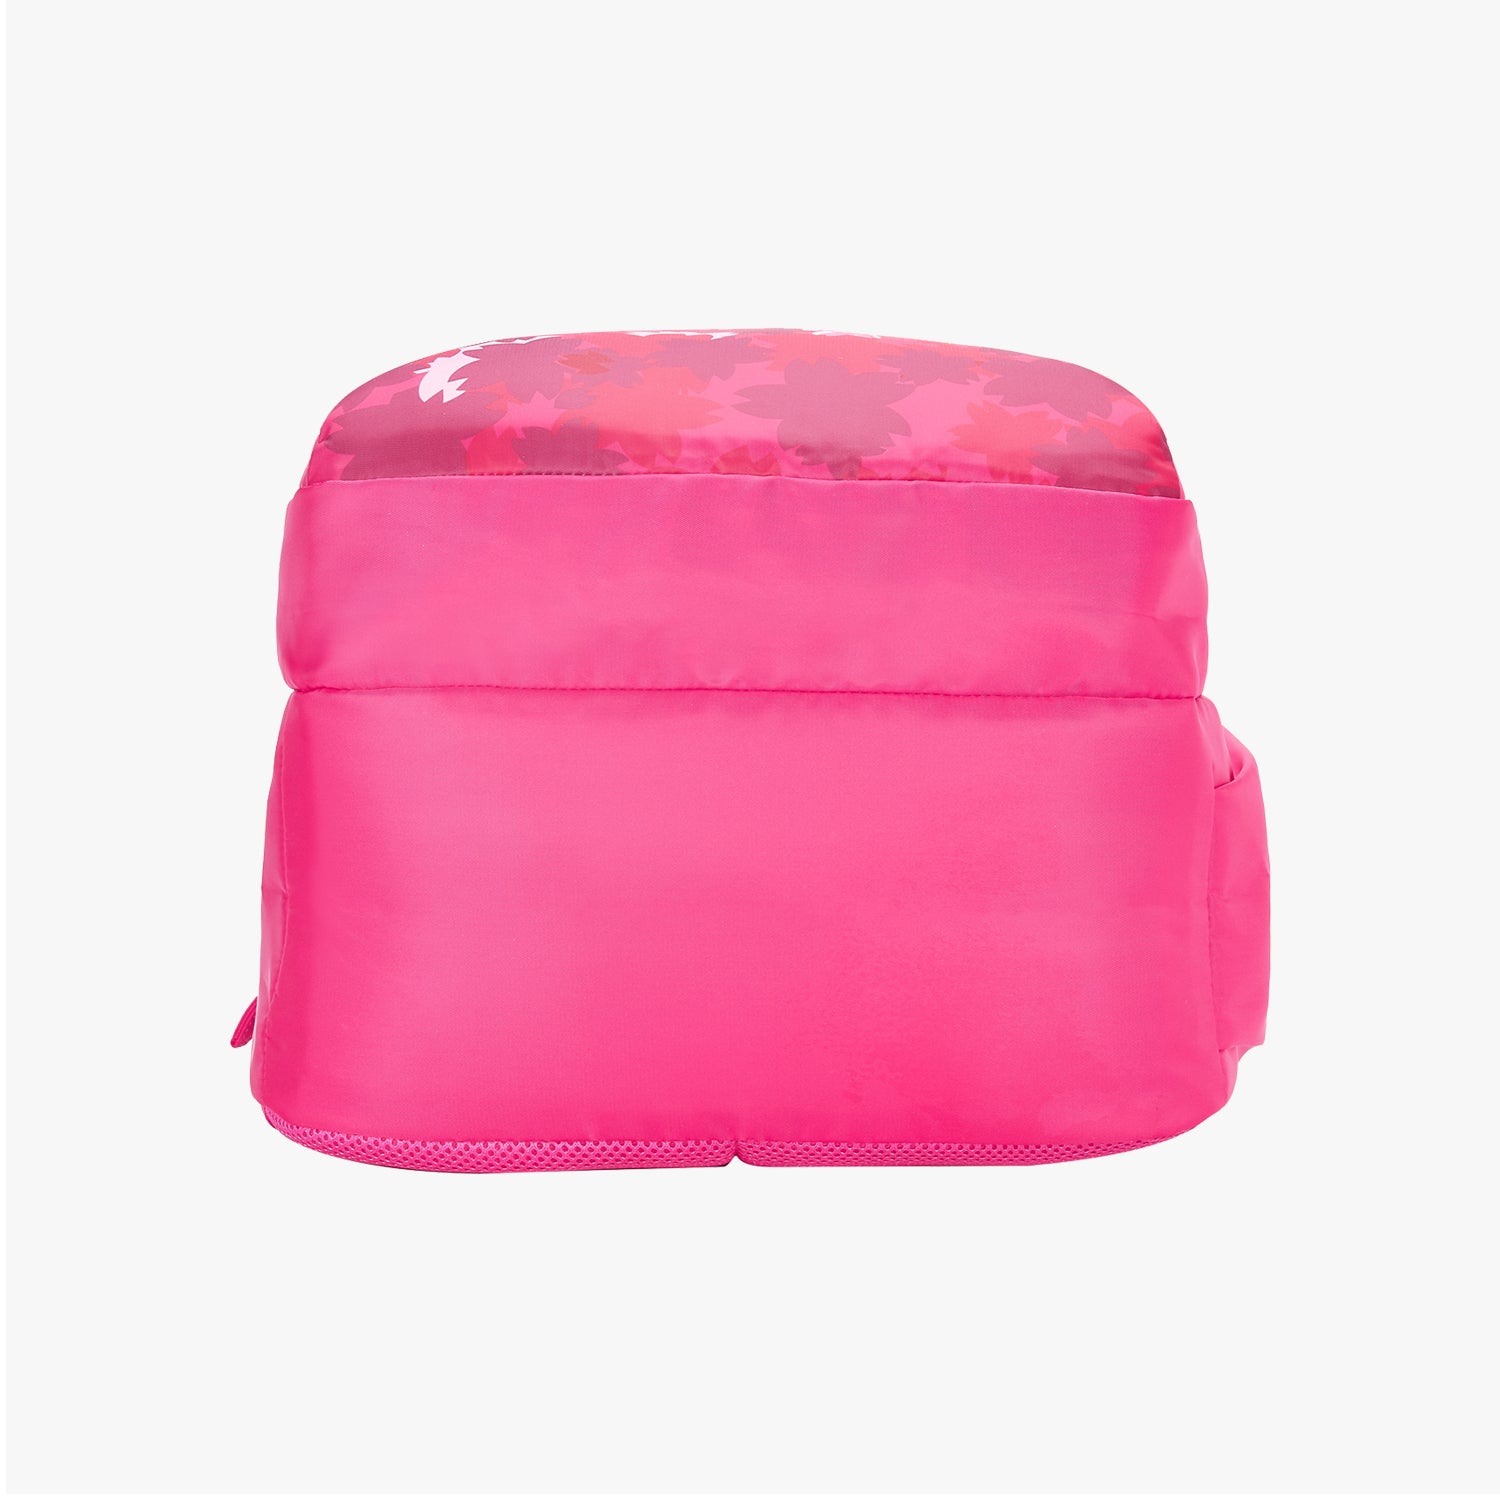 Zinnia School Backpack - Pink